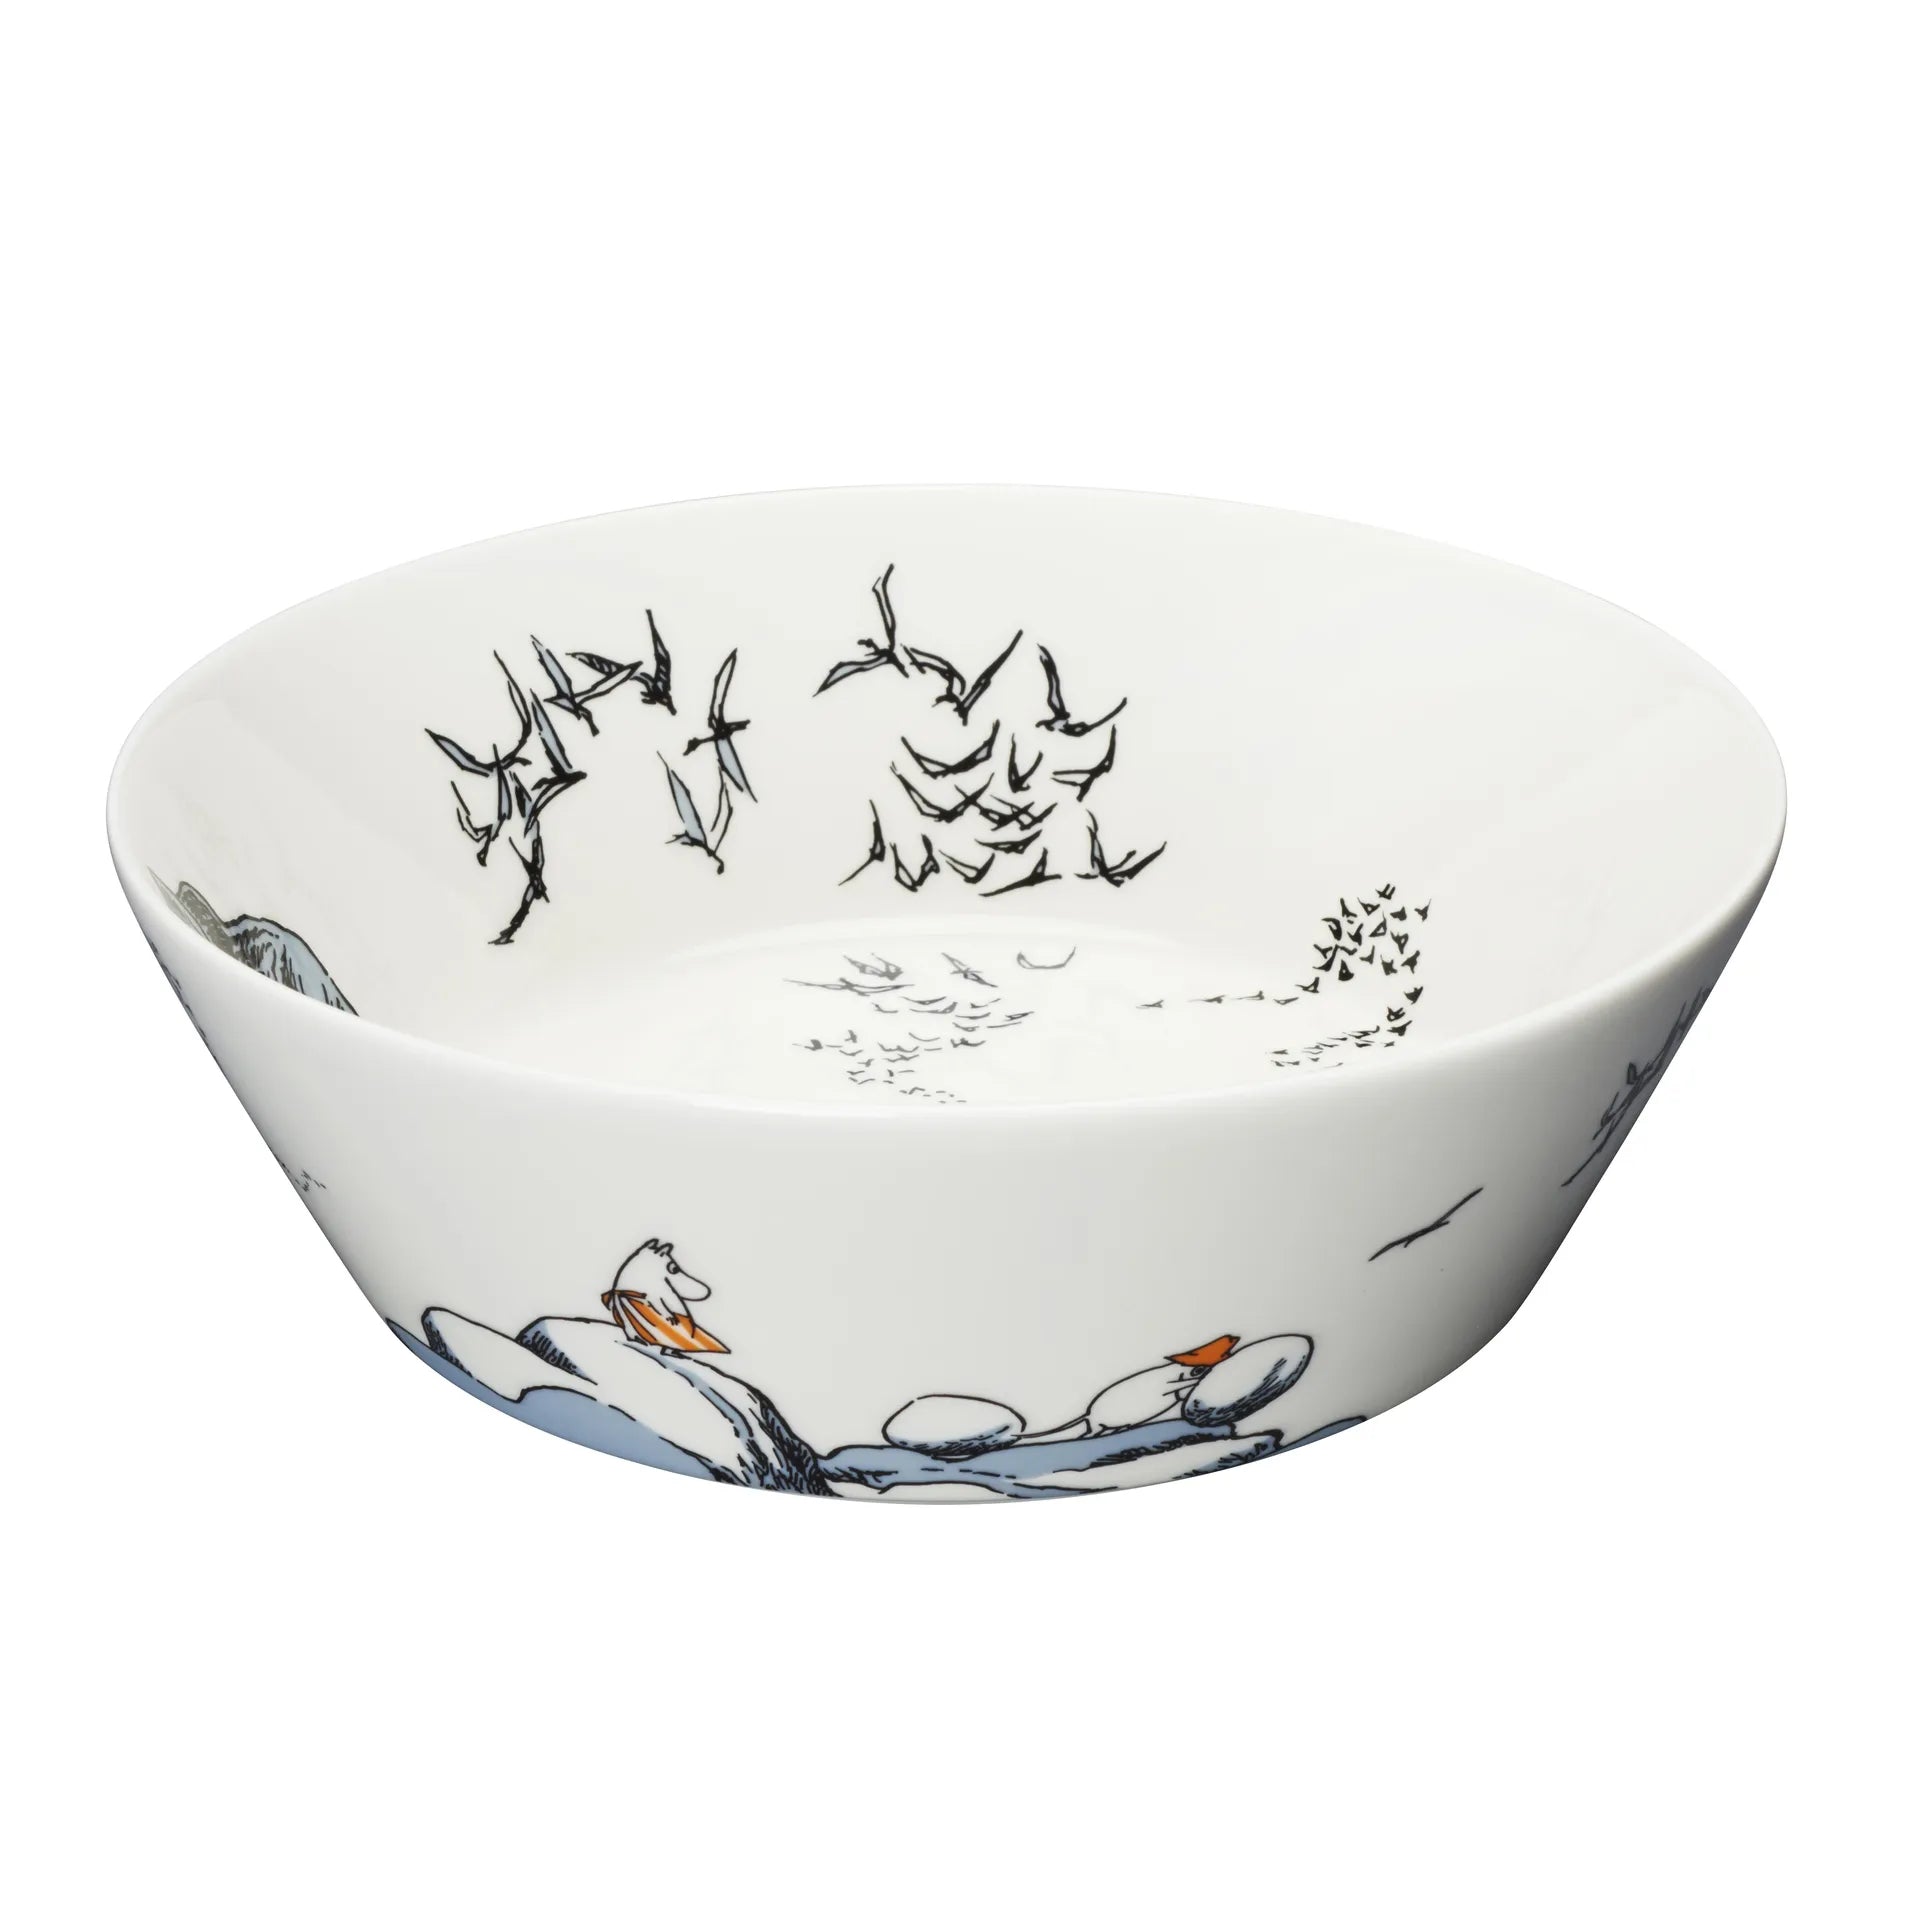 Serving bowl True to it's origins Moomin serving bowl - 23 cm